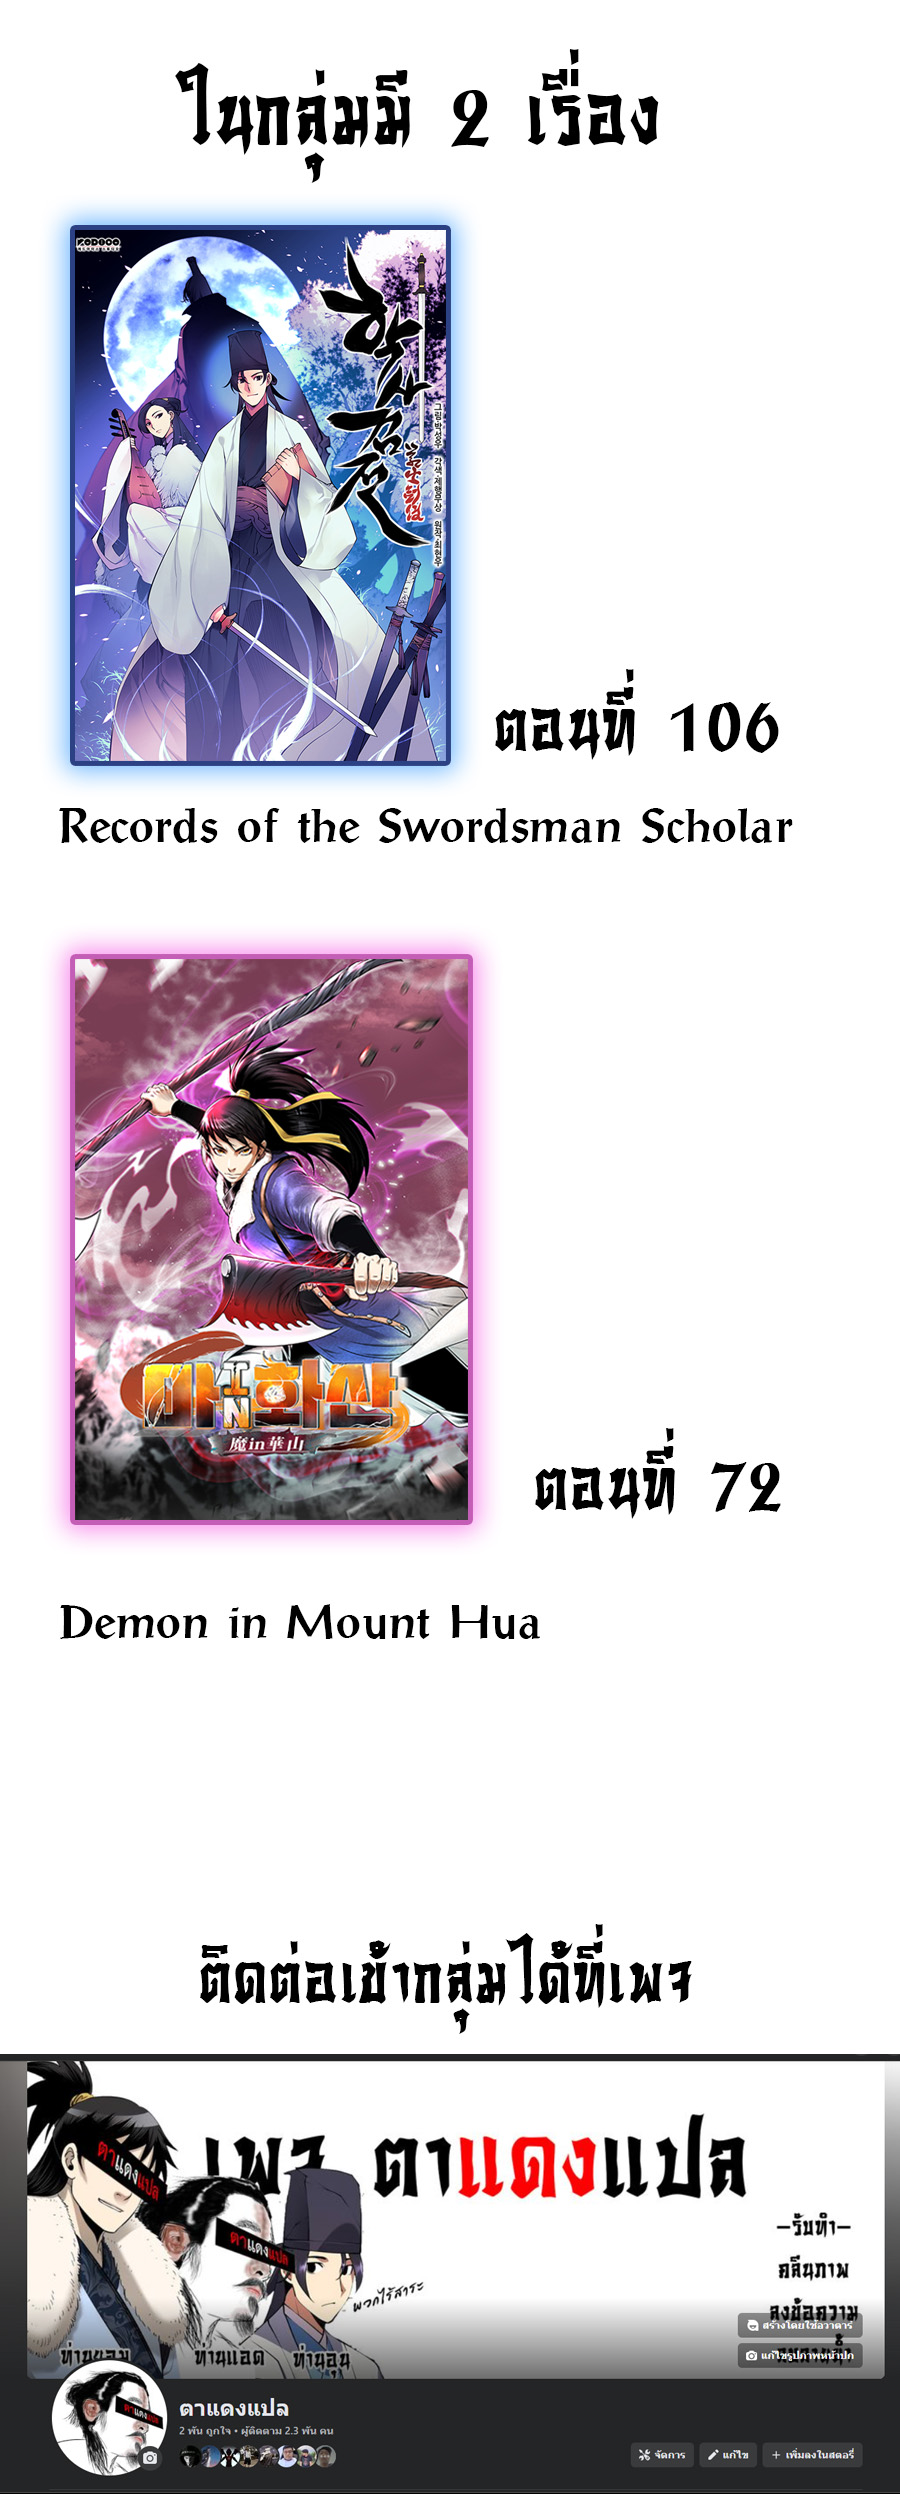 Records of the Swordsman Scholar 84 (14)